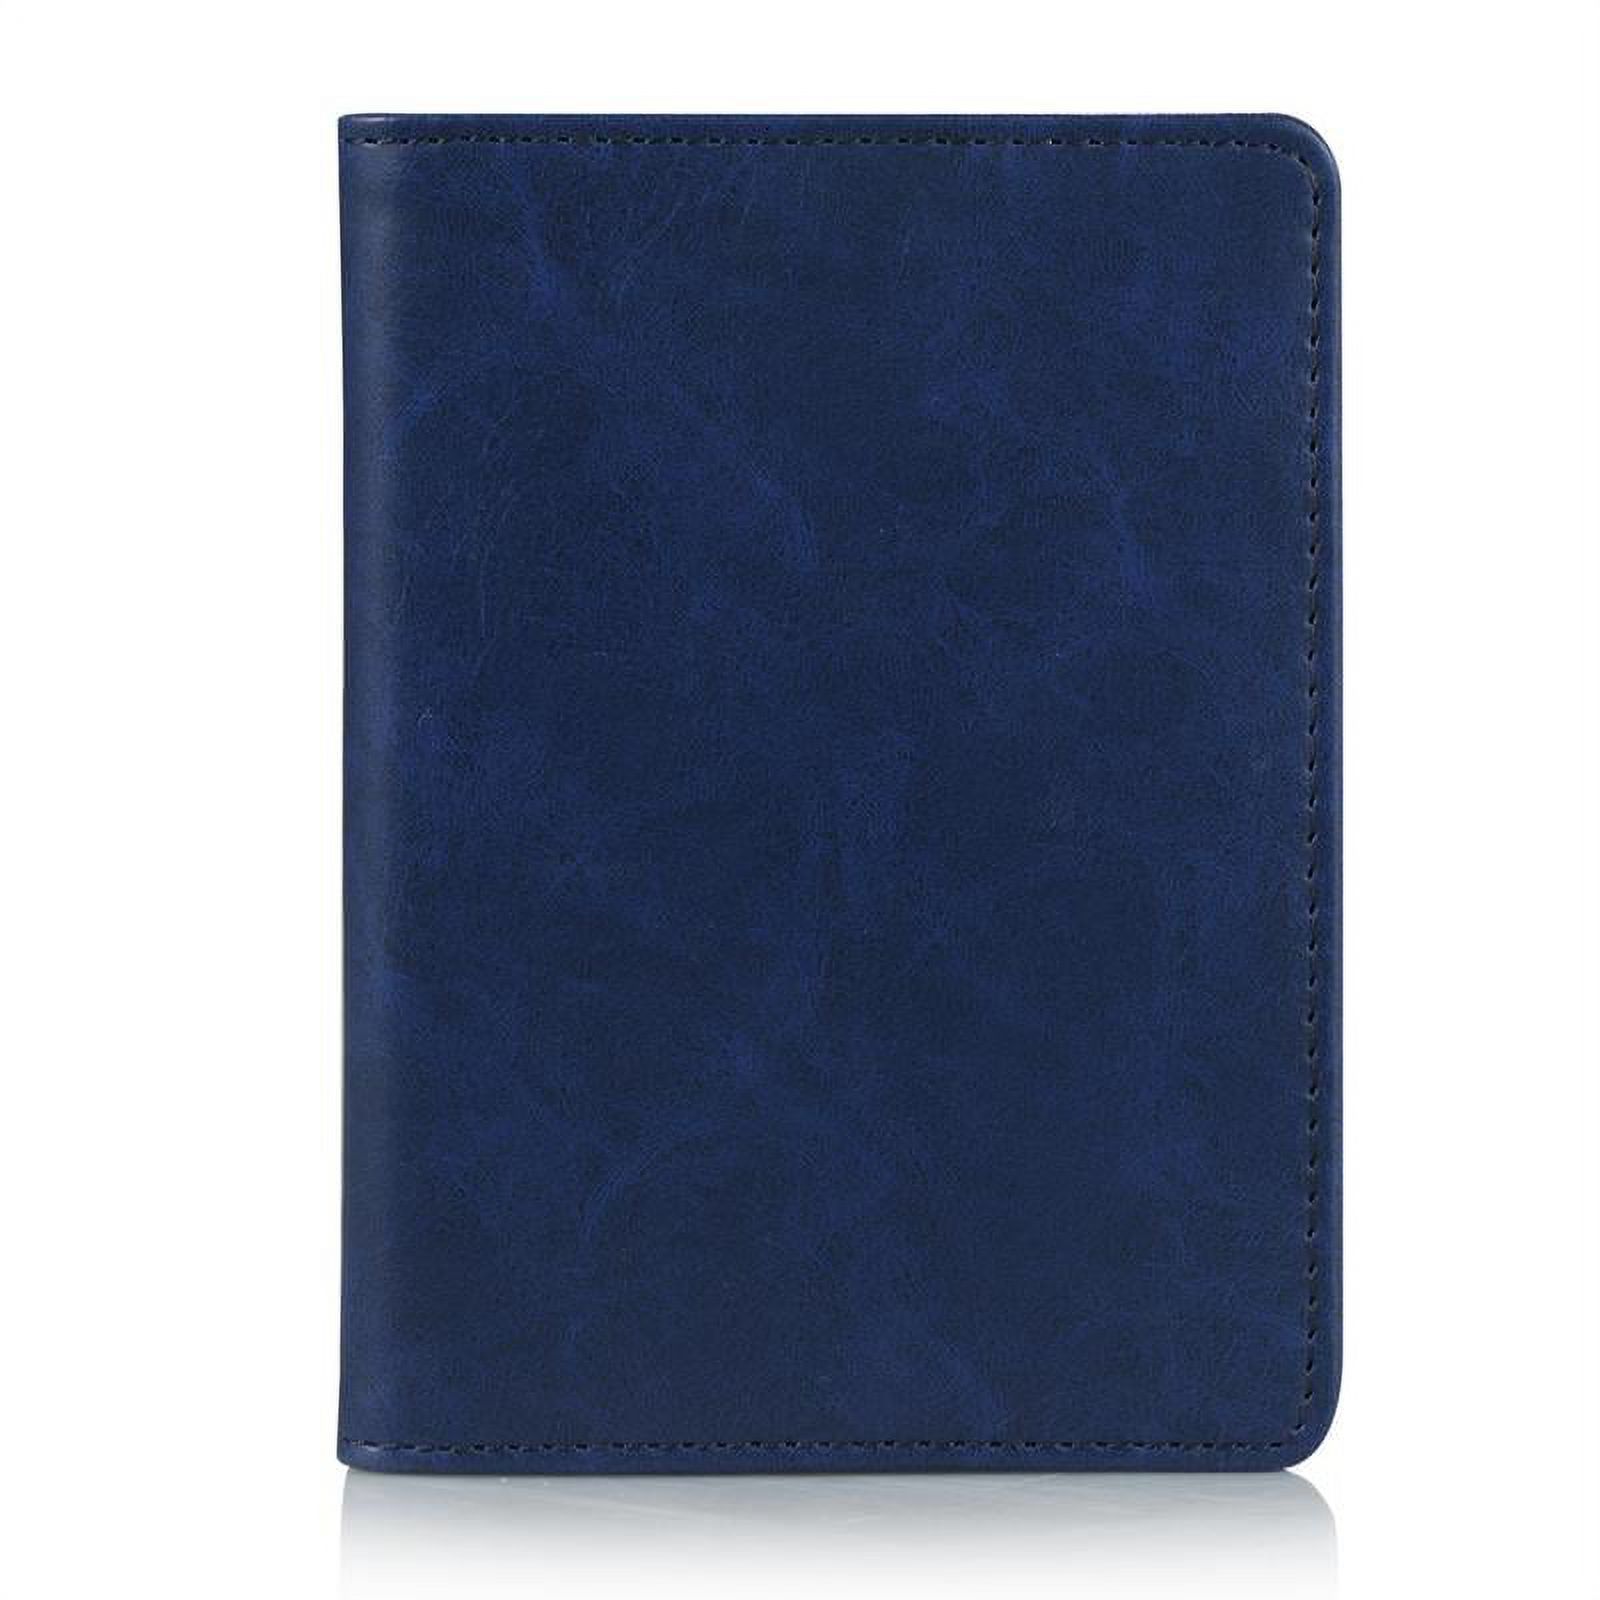 Passport Holder Travel Wallet RFID Blocking Case Cover, EpicGadget Premium PU Leather Passport Holder Travel Wallet Cover Case (Navy Blue) - image 3 of 4